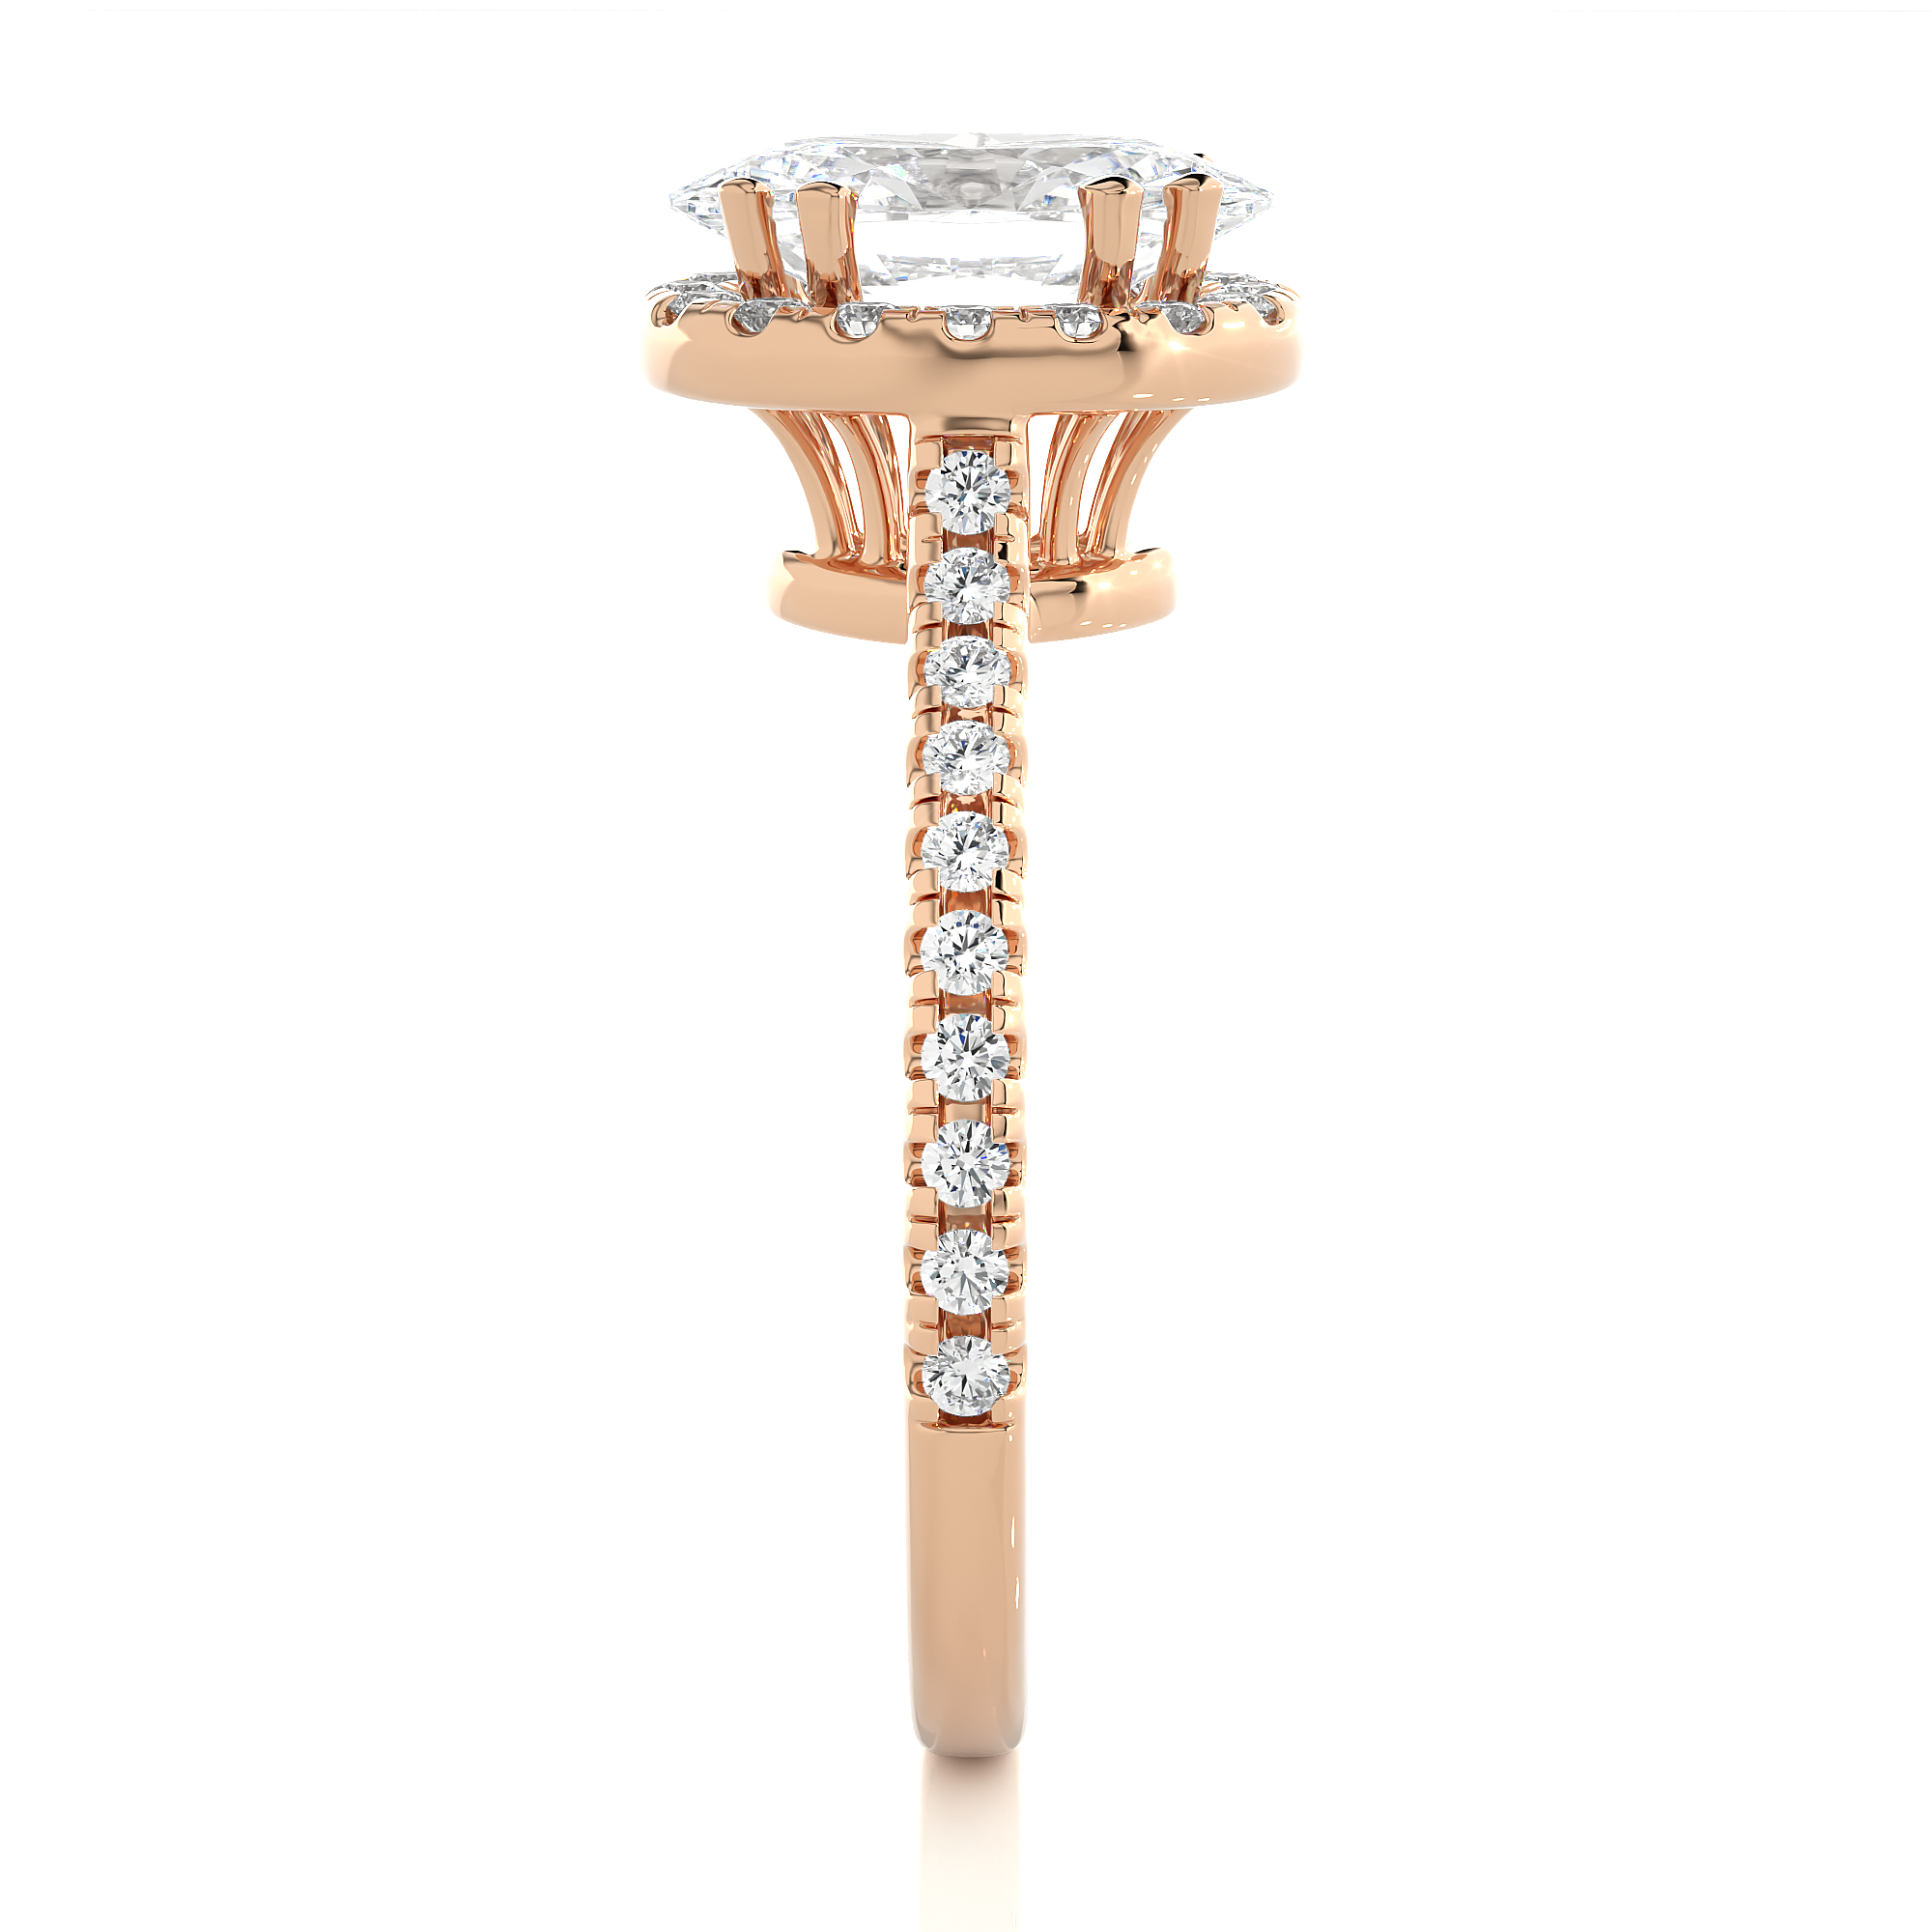 1.49Ct Oval Cut Solitaire Diamond Ring in Rose Gold - Blu Diamonds